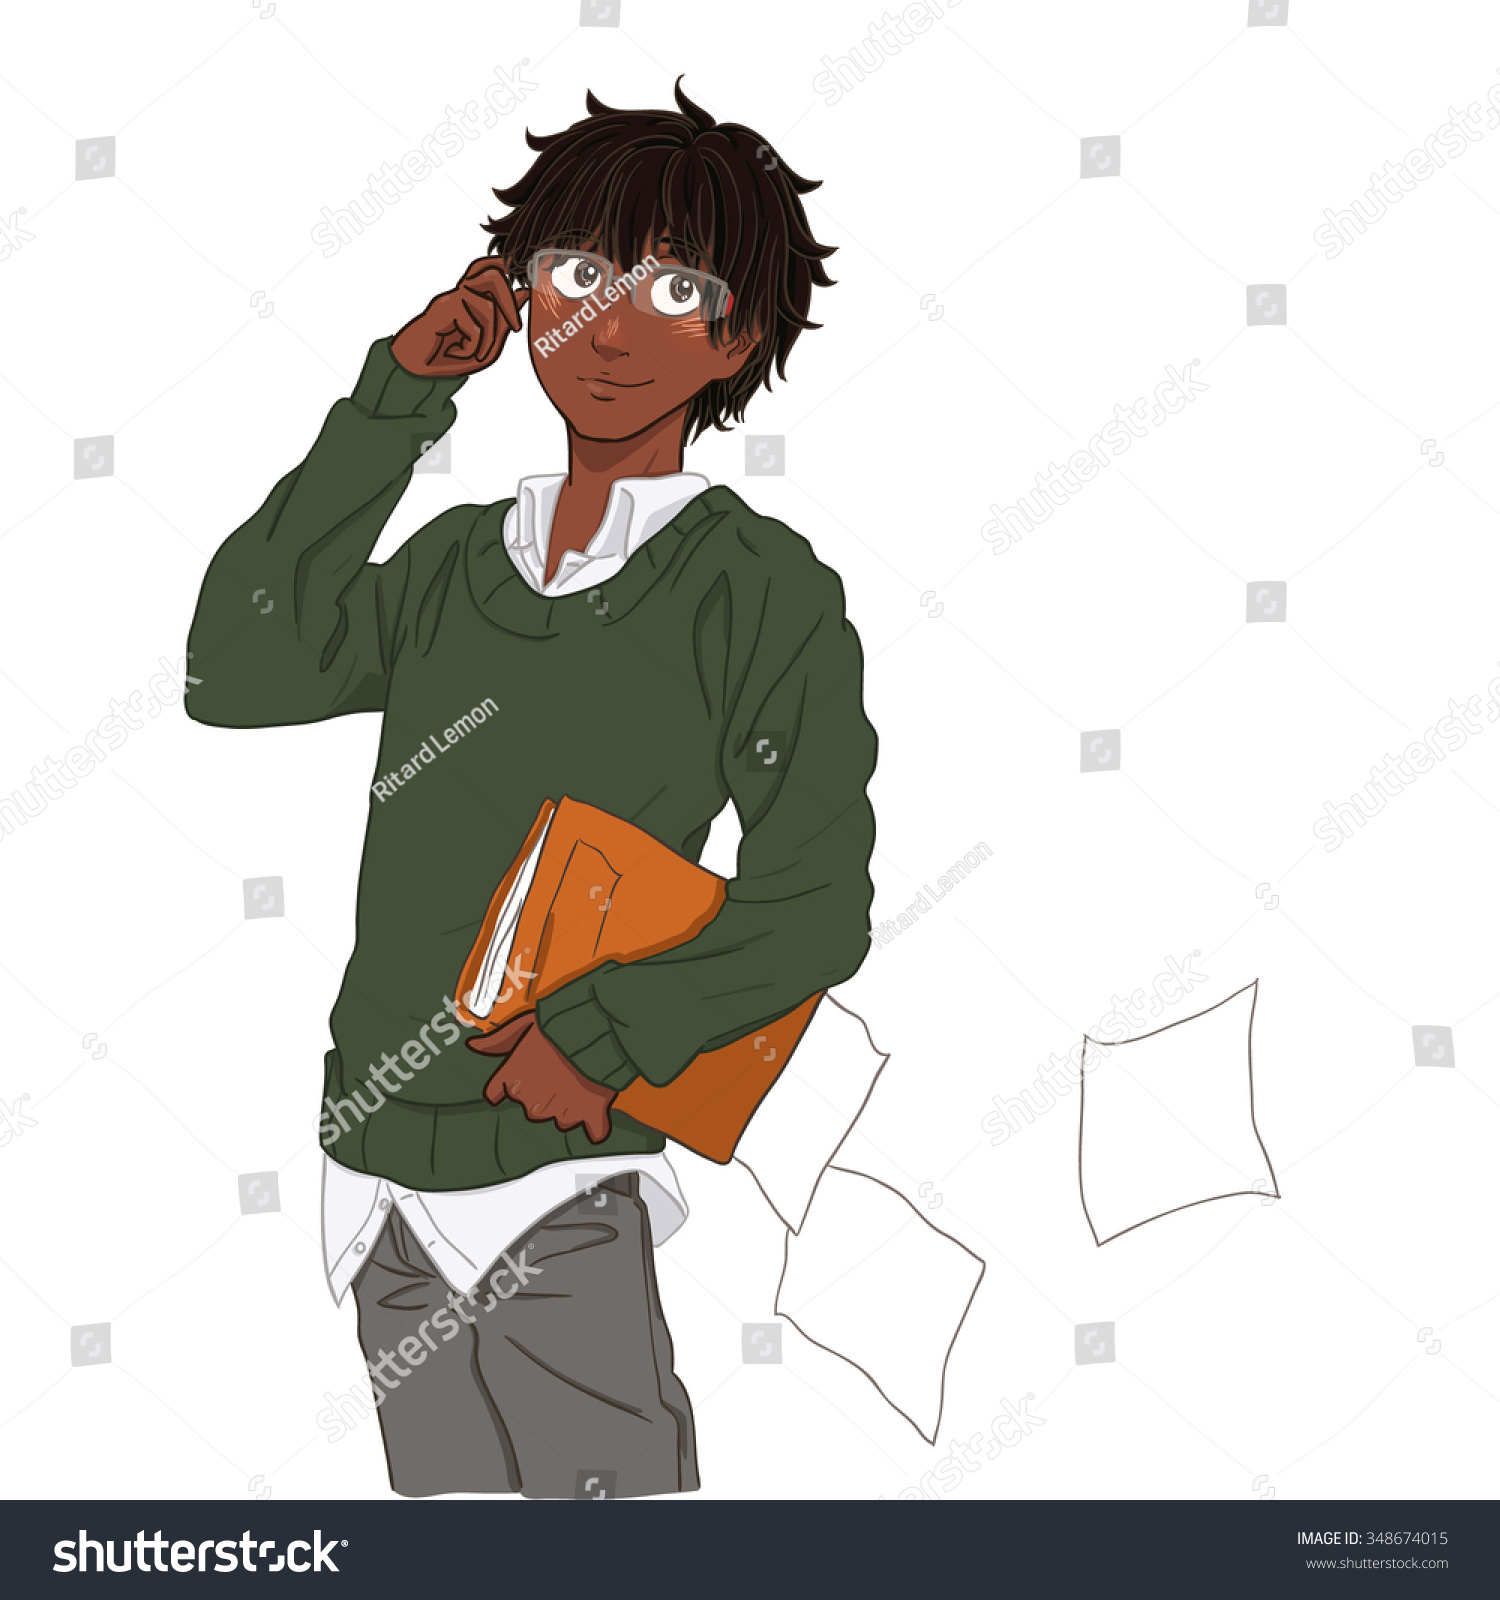 Free Printable Anime Boy With Glasses Sketch